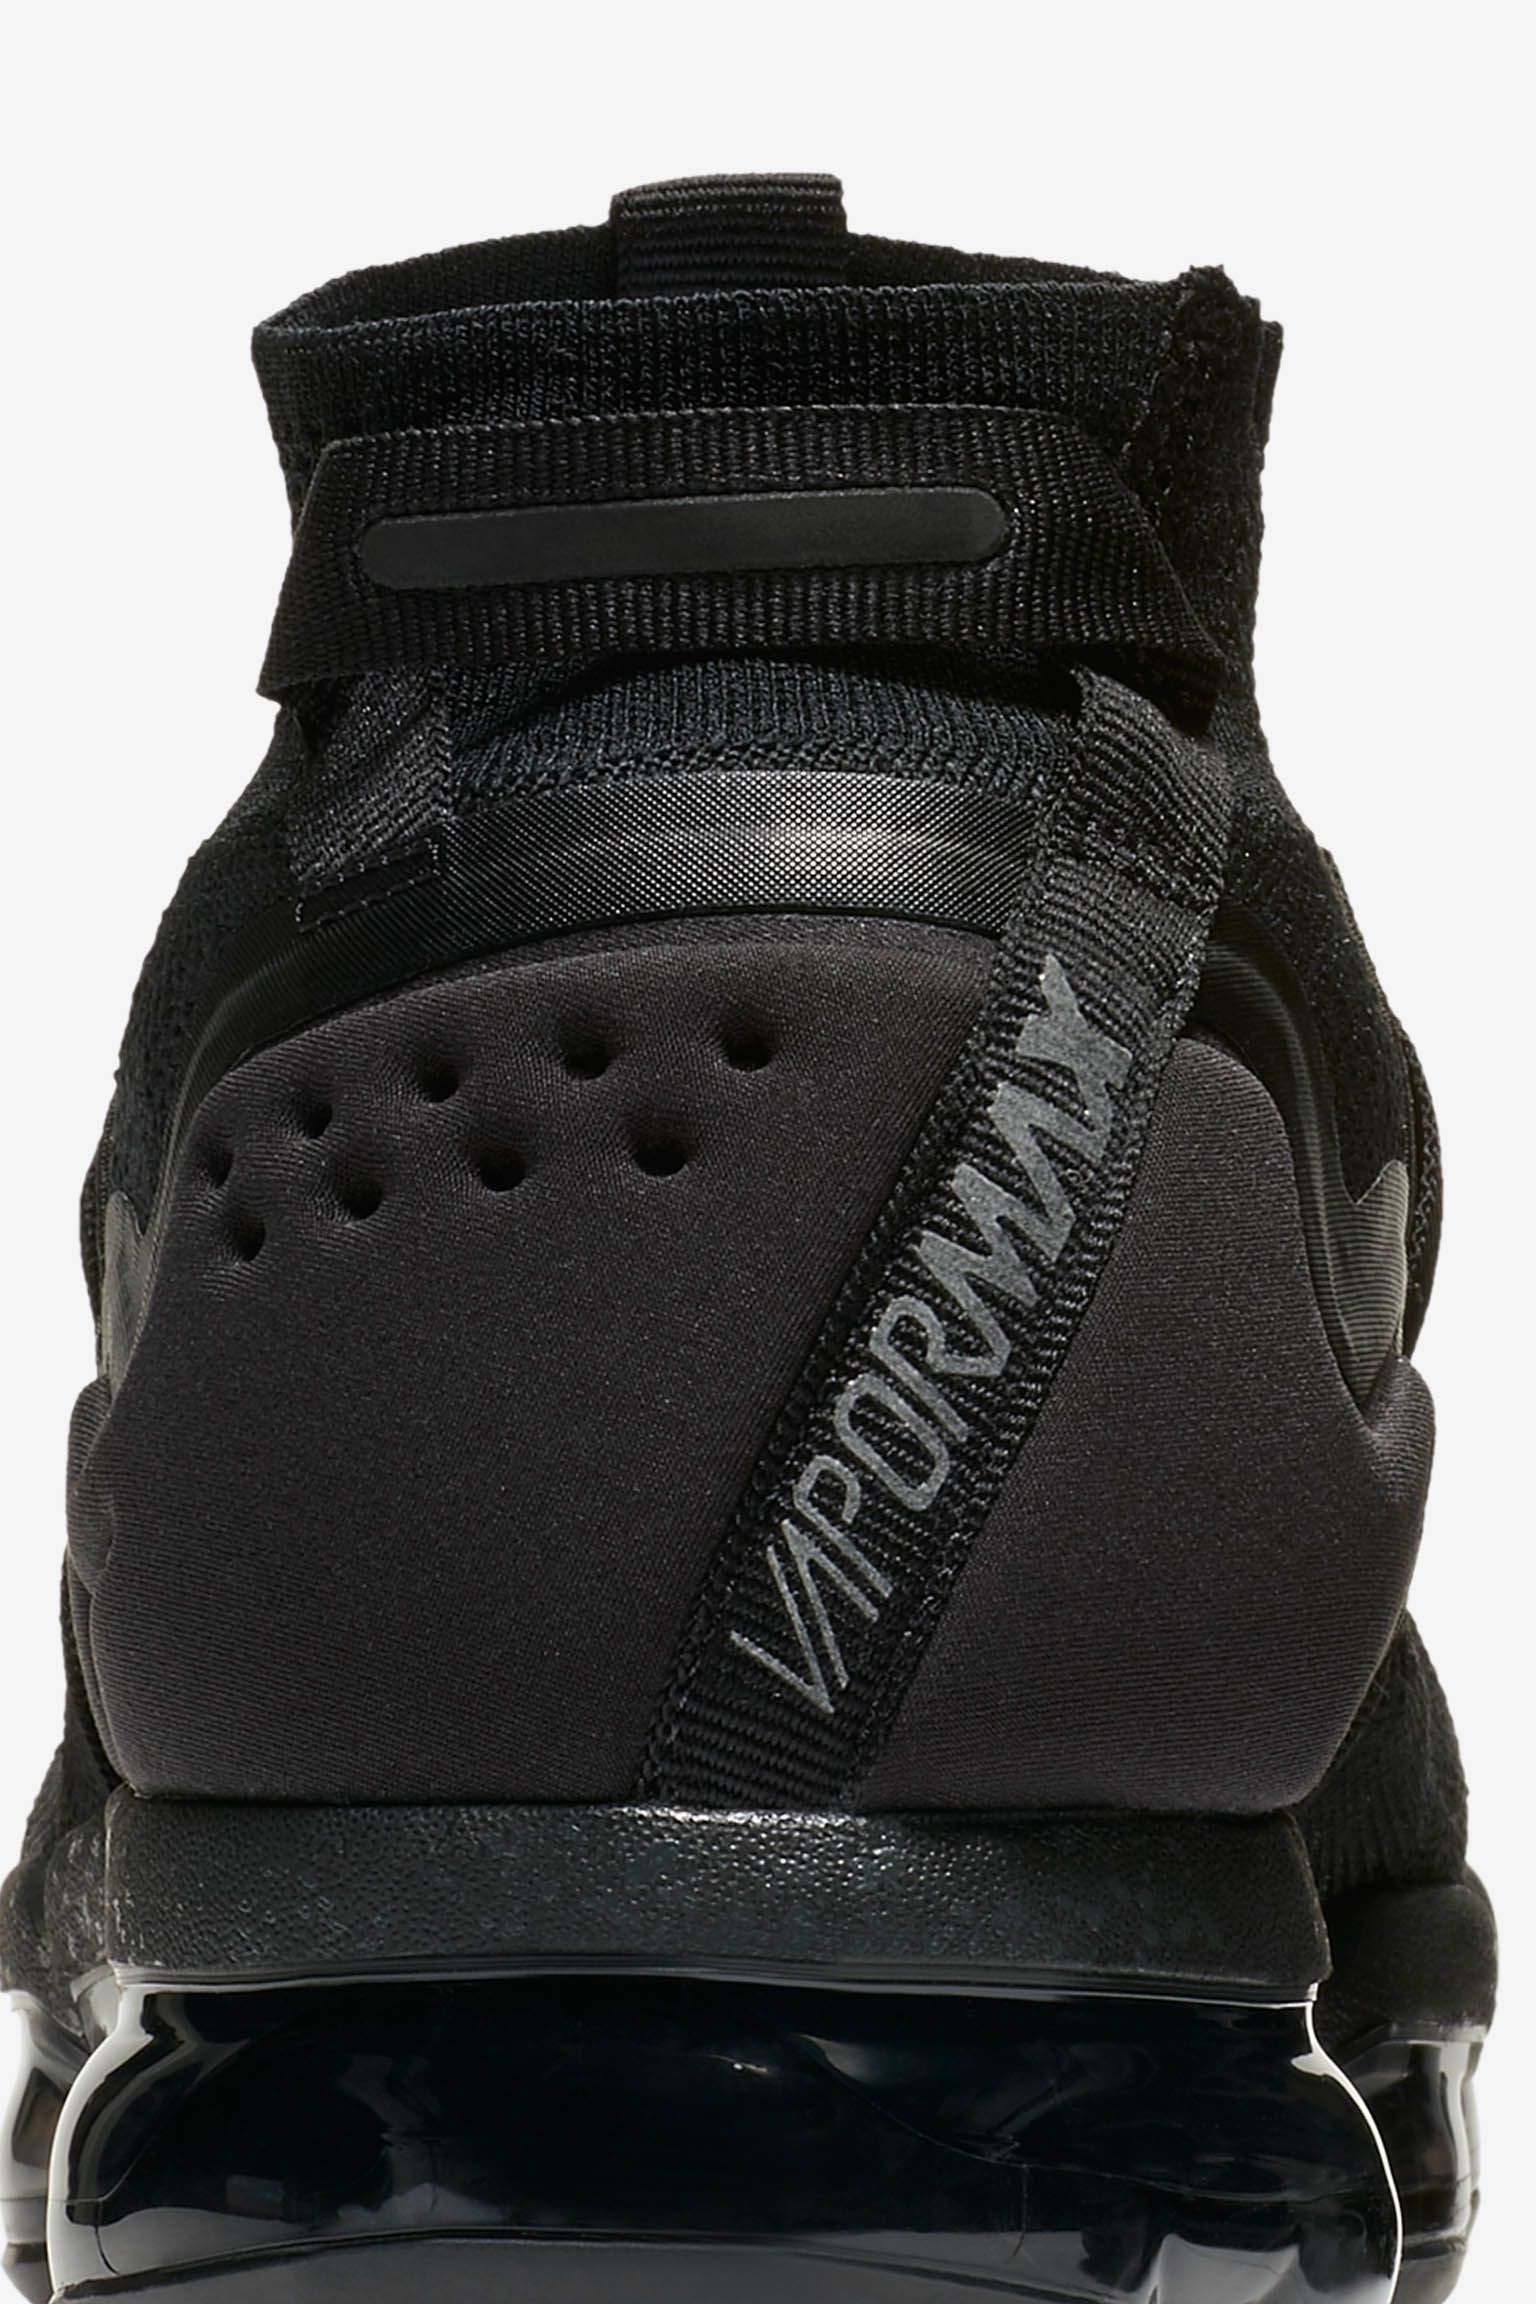 Nike Air Vapormax Flyknit Utility 'Black' Release Date. Nike SNKRS